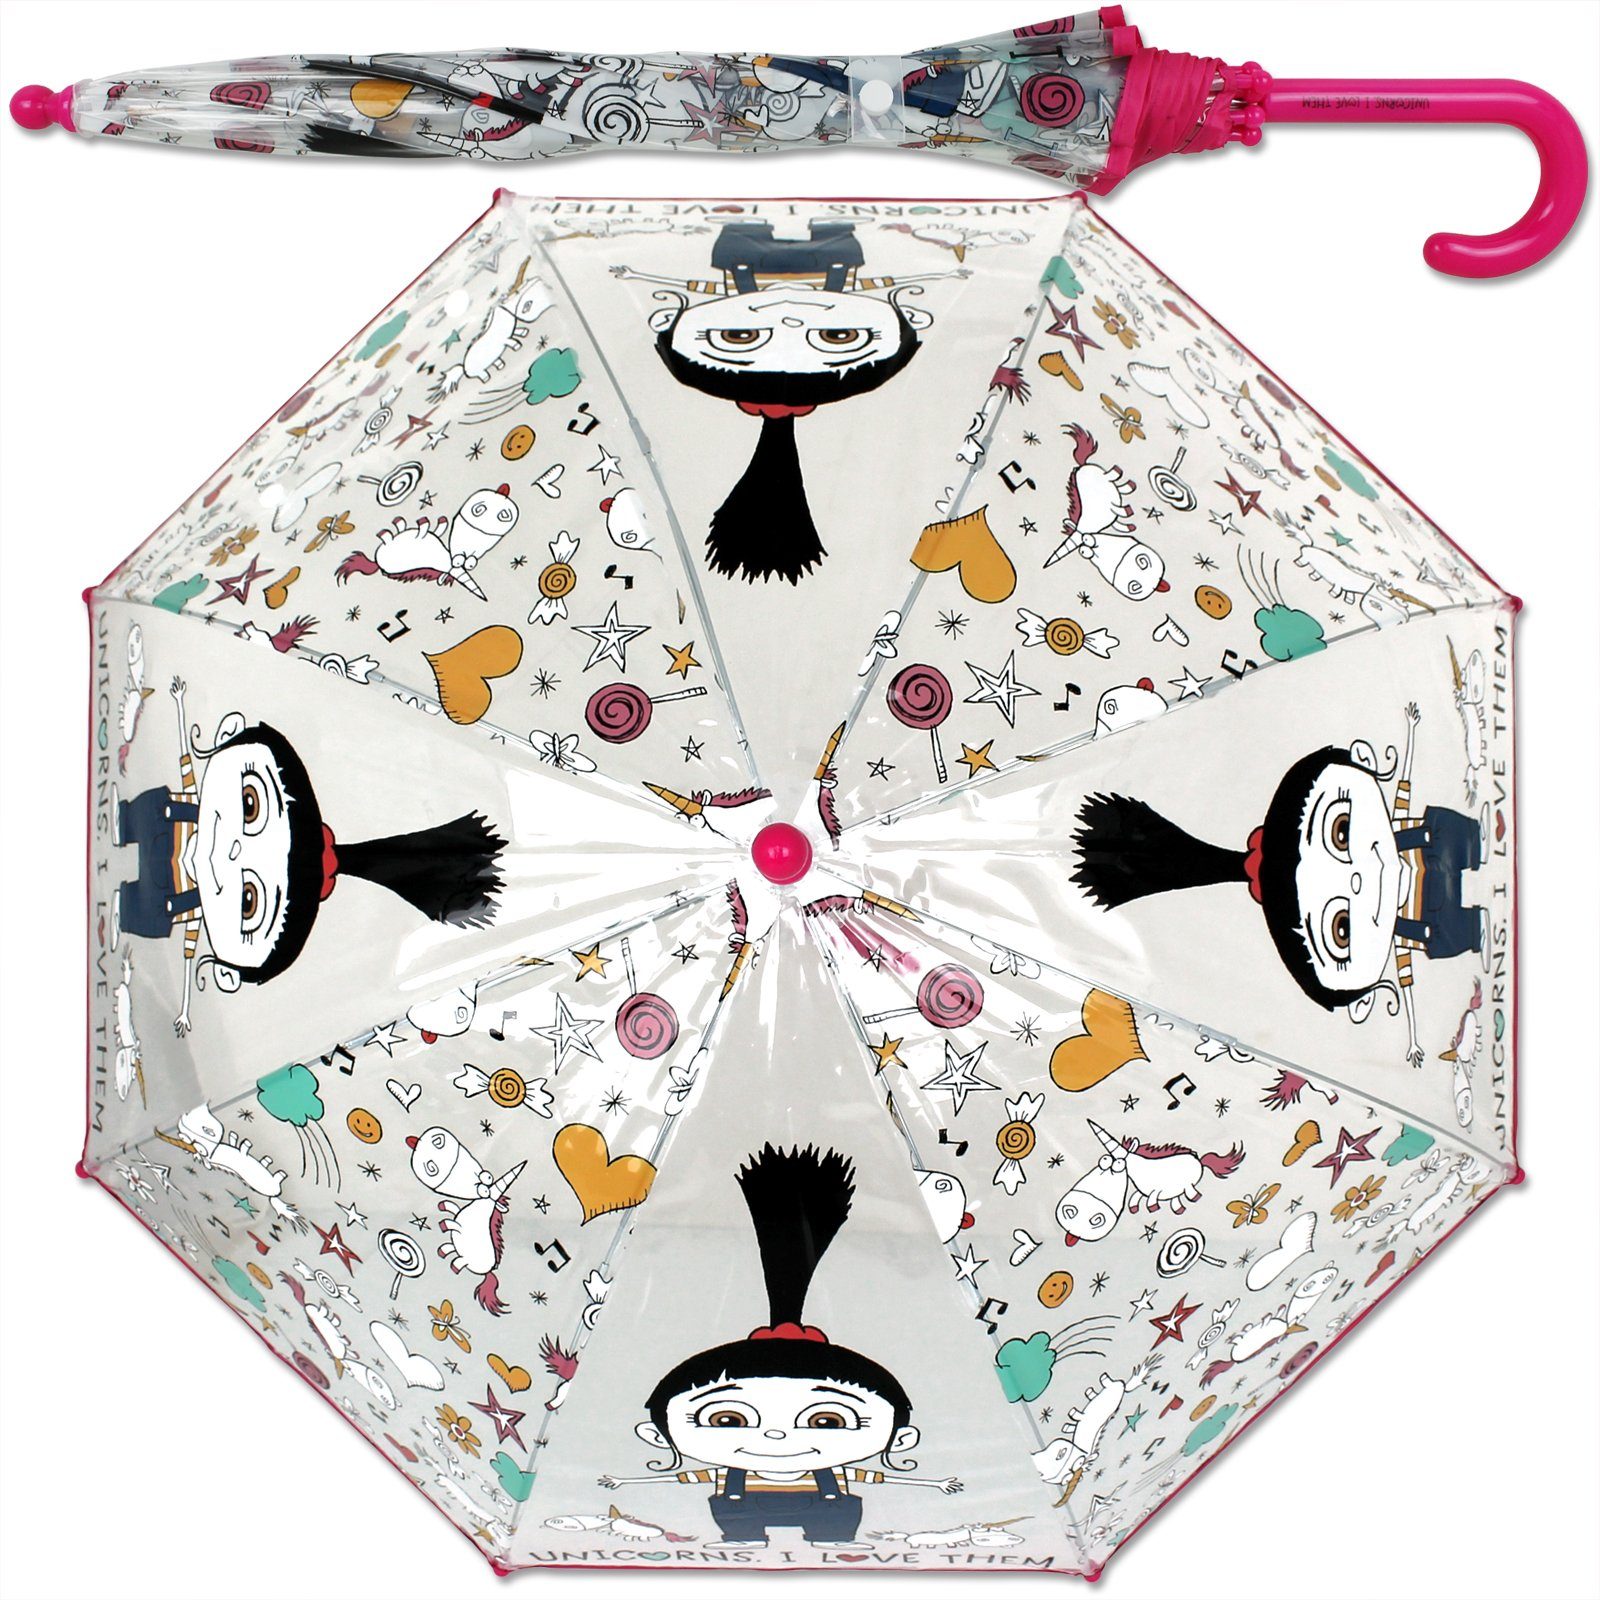 Stockregenschirm Regenschirm Durchsichtig Pink Süß Einhorn Motiv, Kinder Schirm Kinderregenschirm Kinderschirm